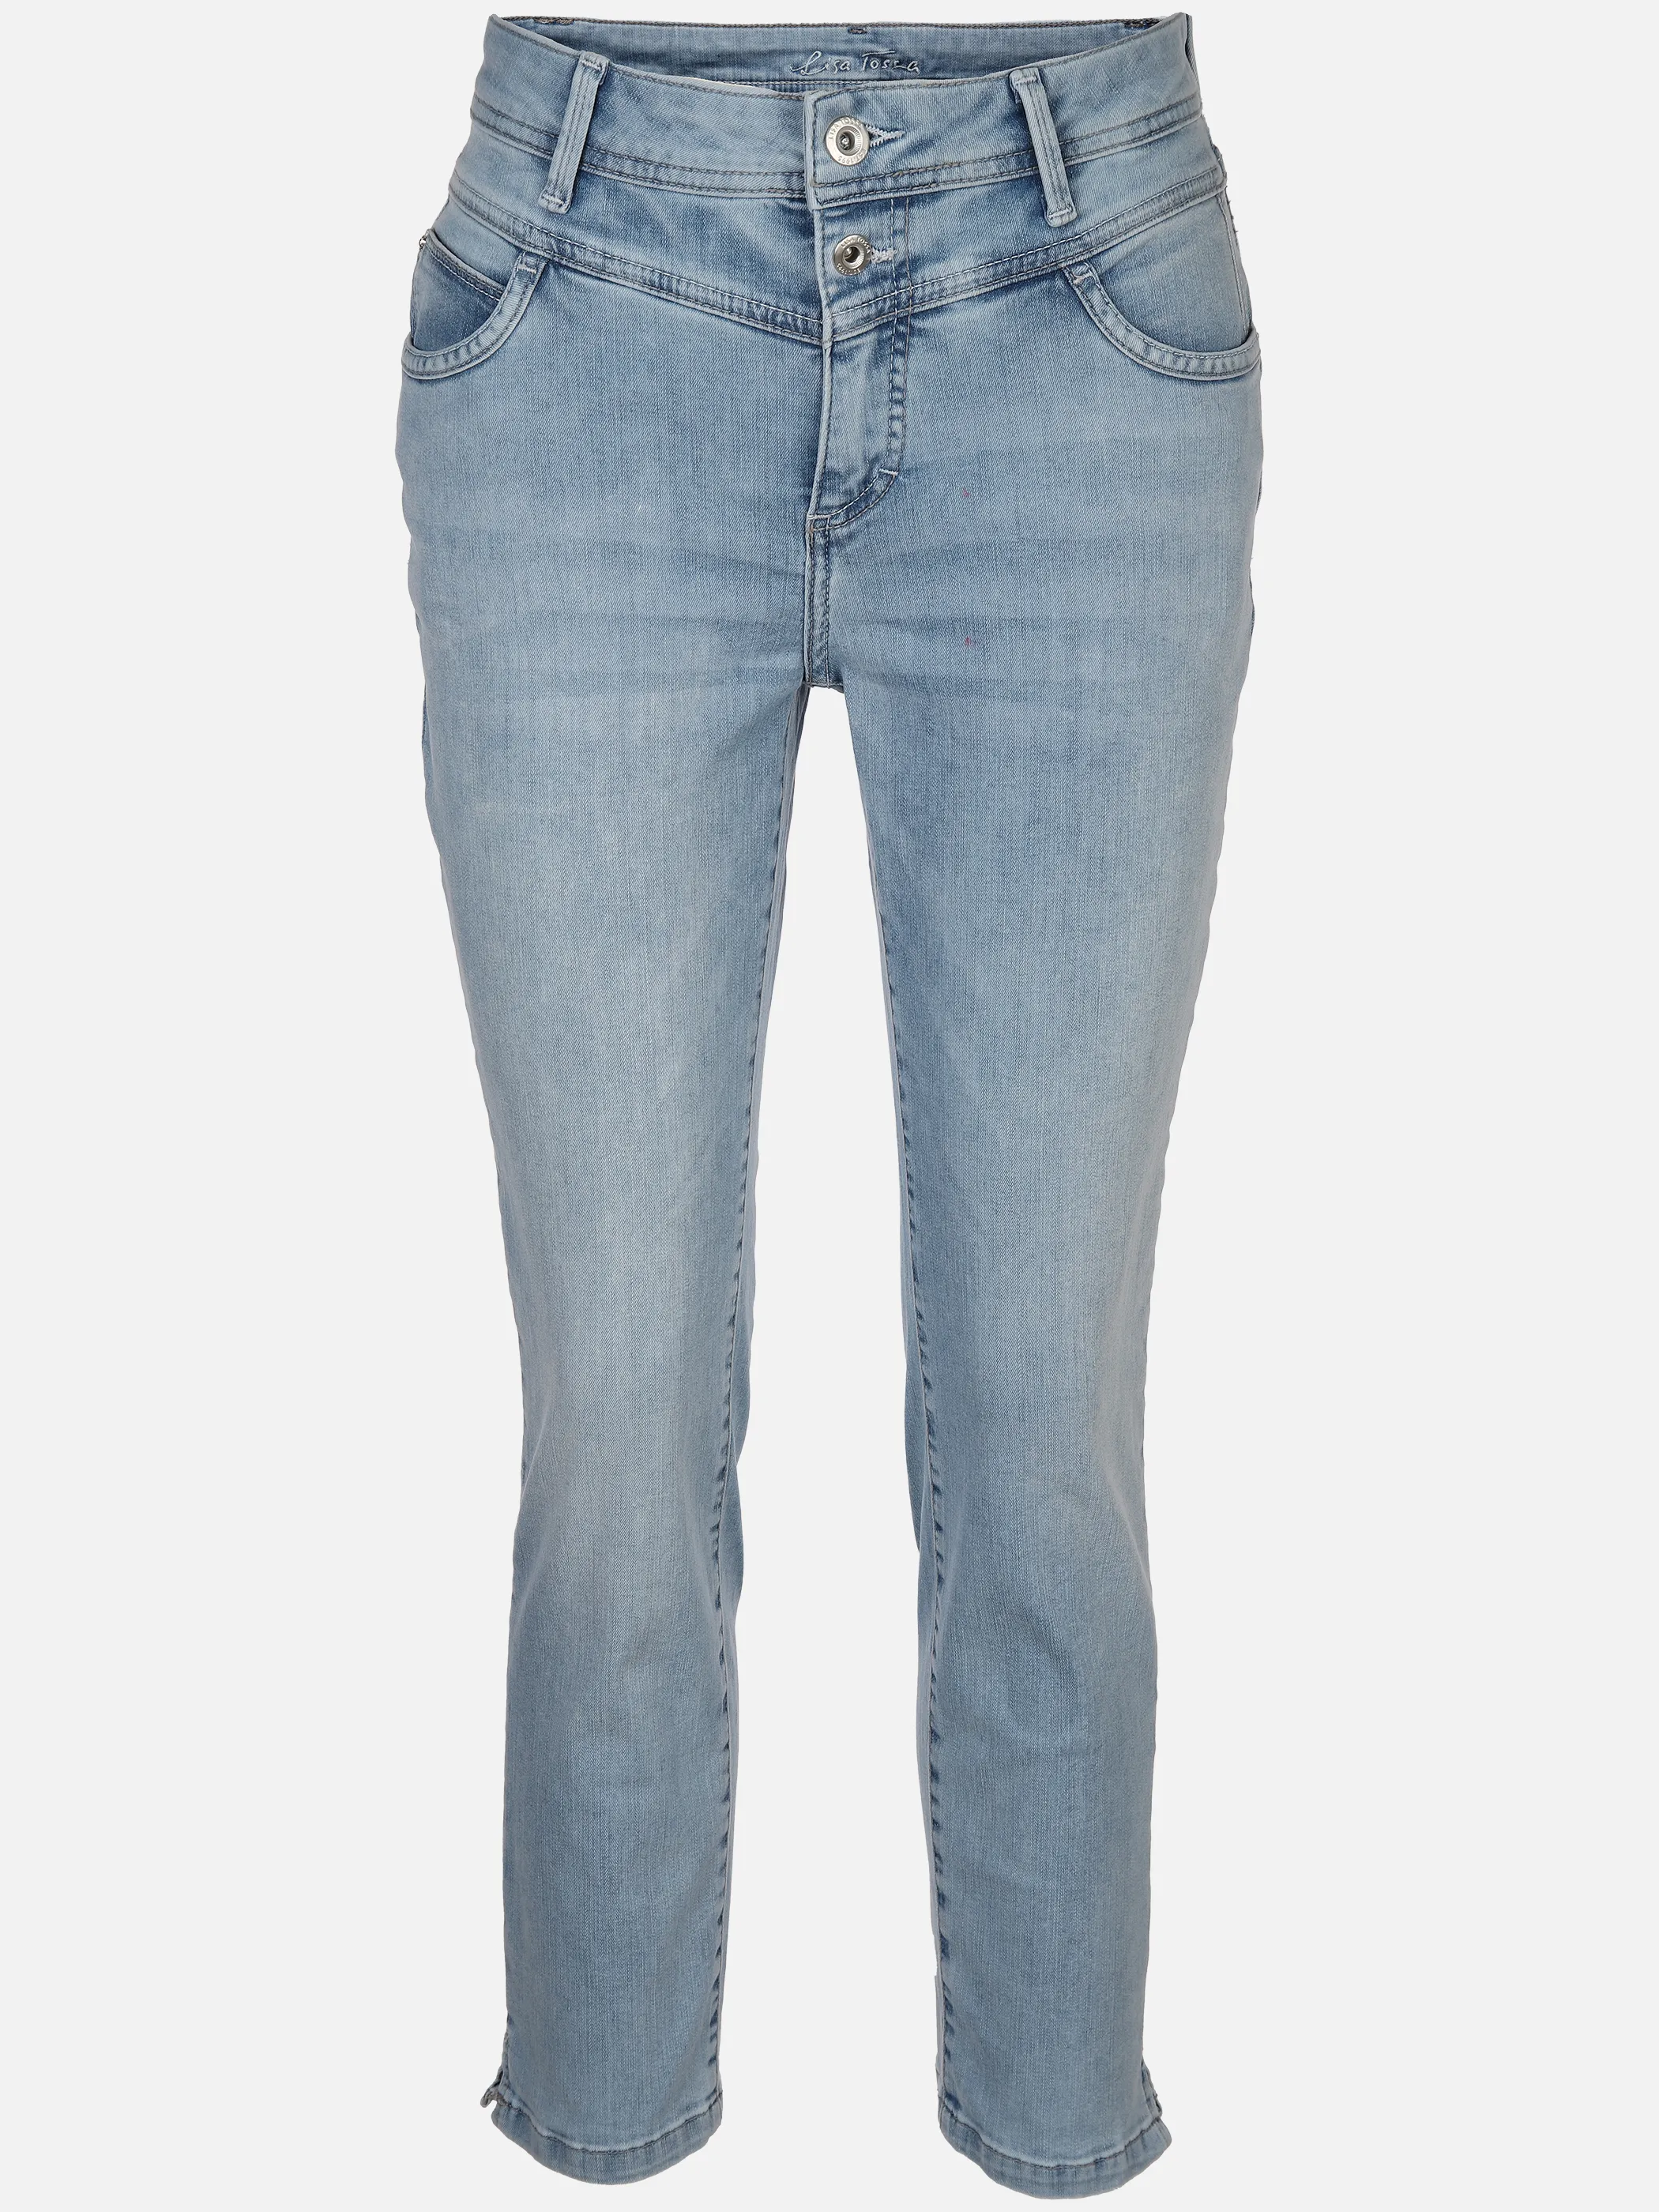 Lisa Tossa Da-Jeans in Sommerwaschung Blau 891617 LIGHTBLUE 1